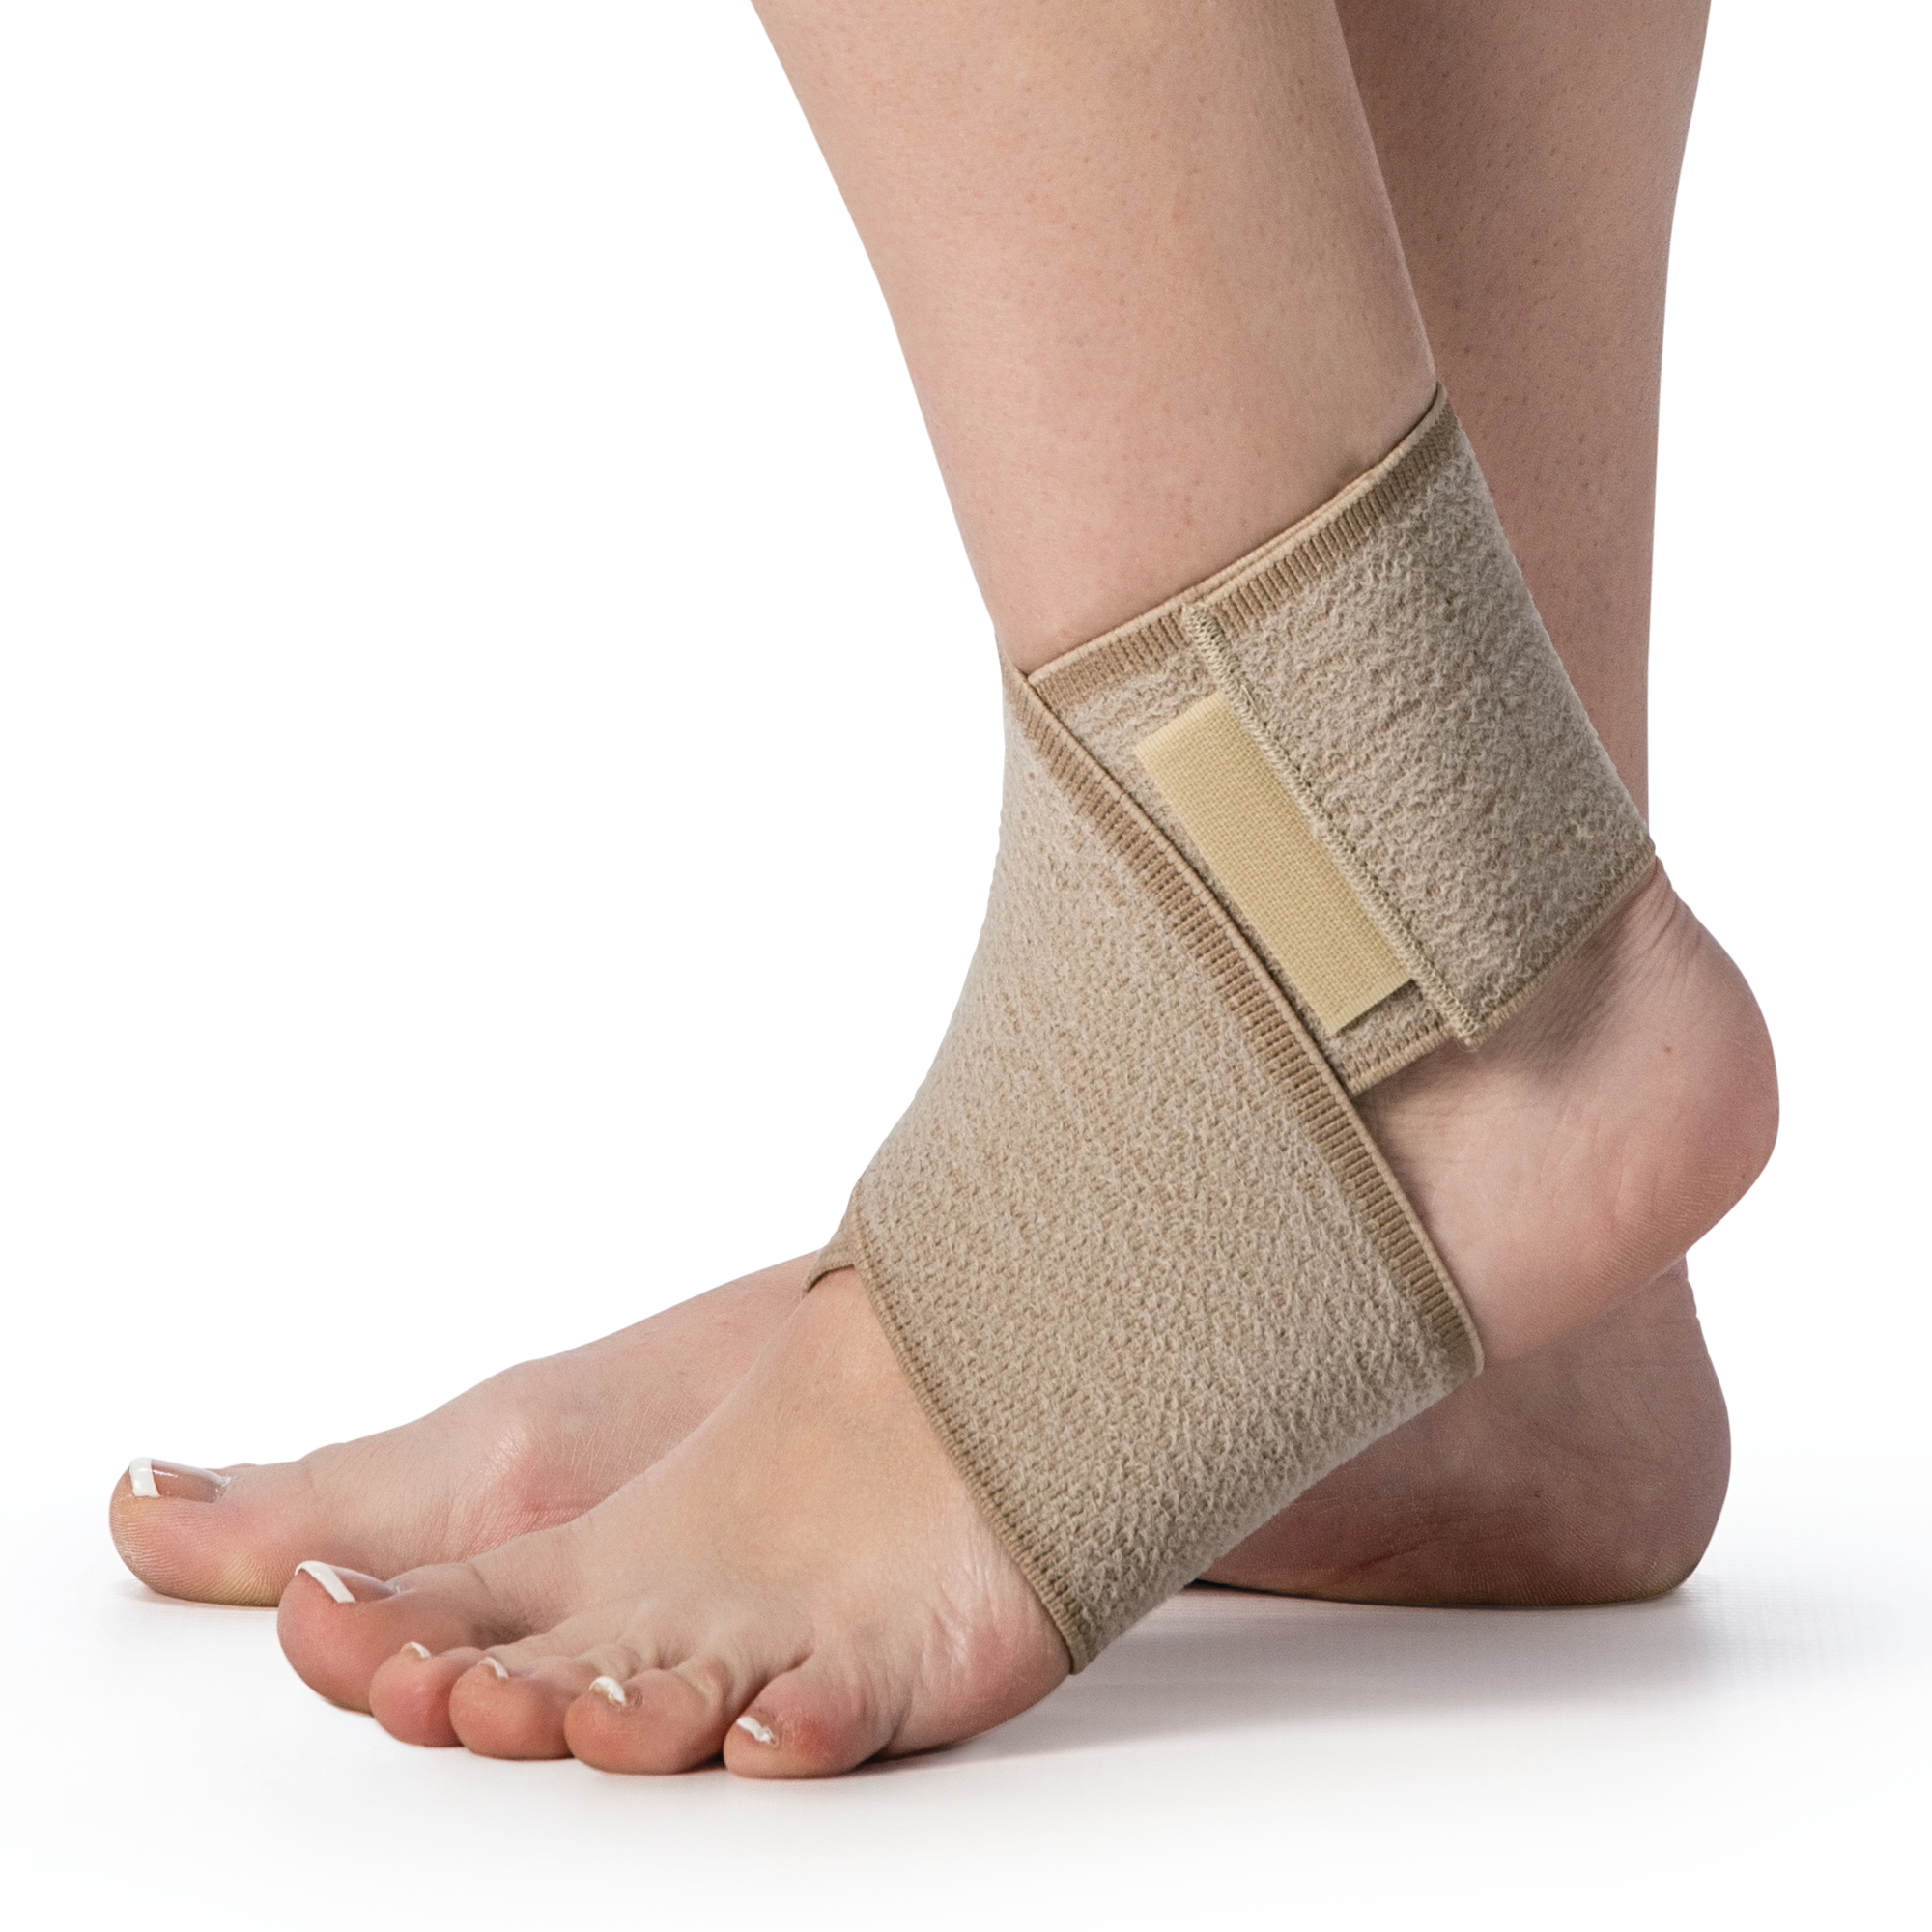 NelMed 3" Beige Ankle Support